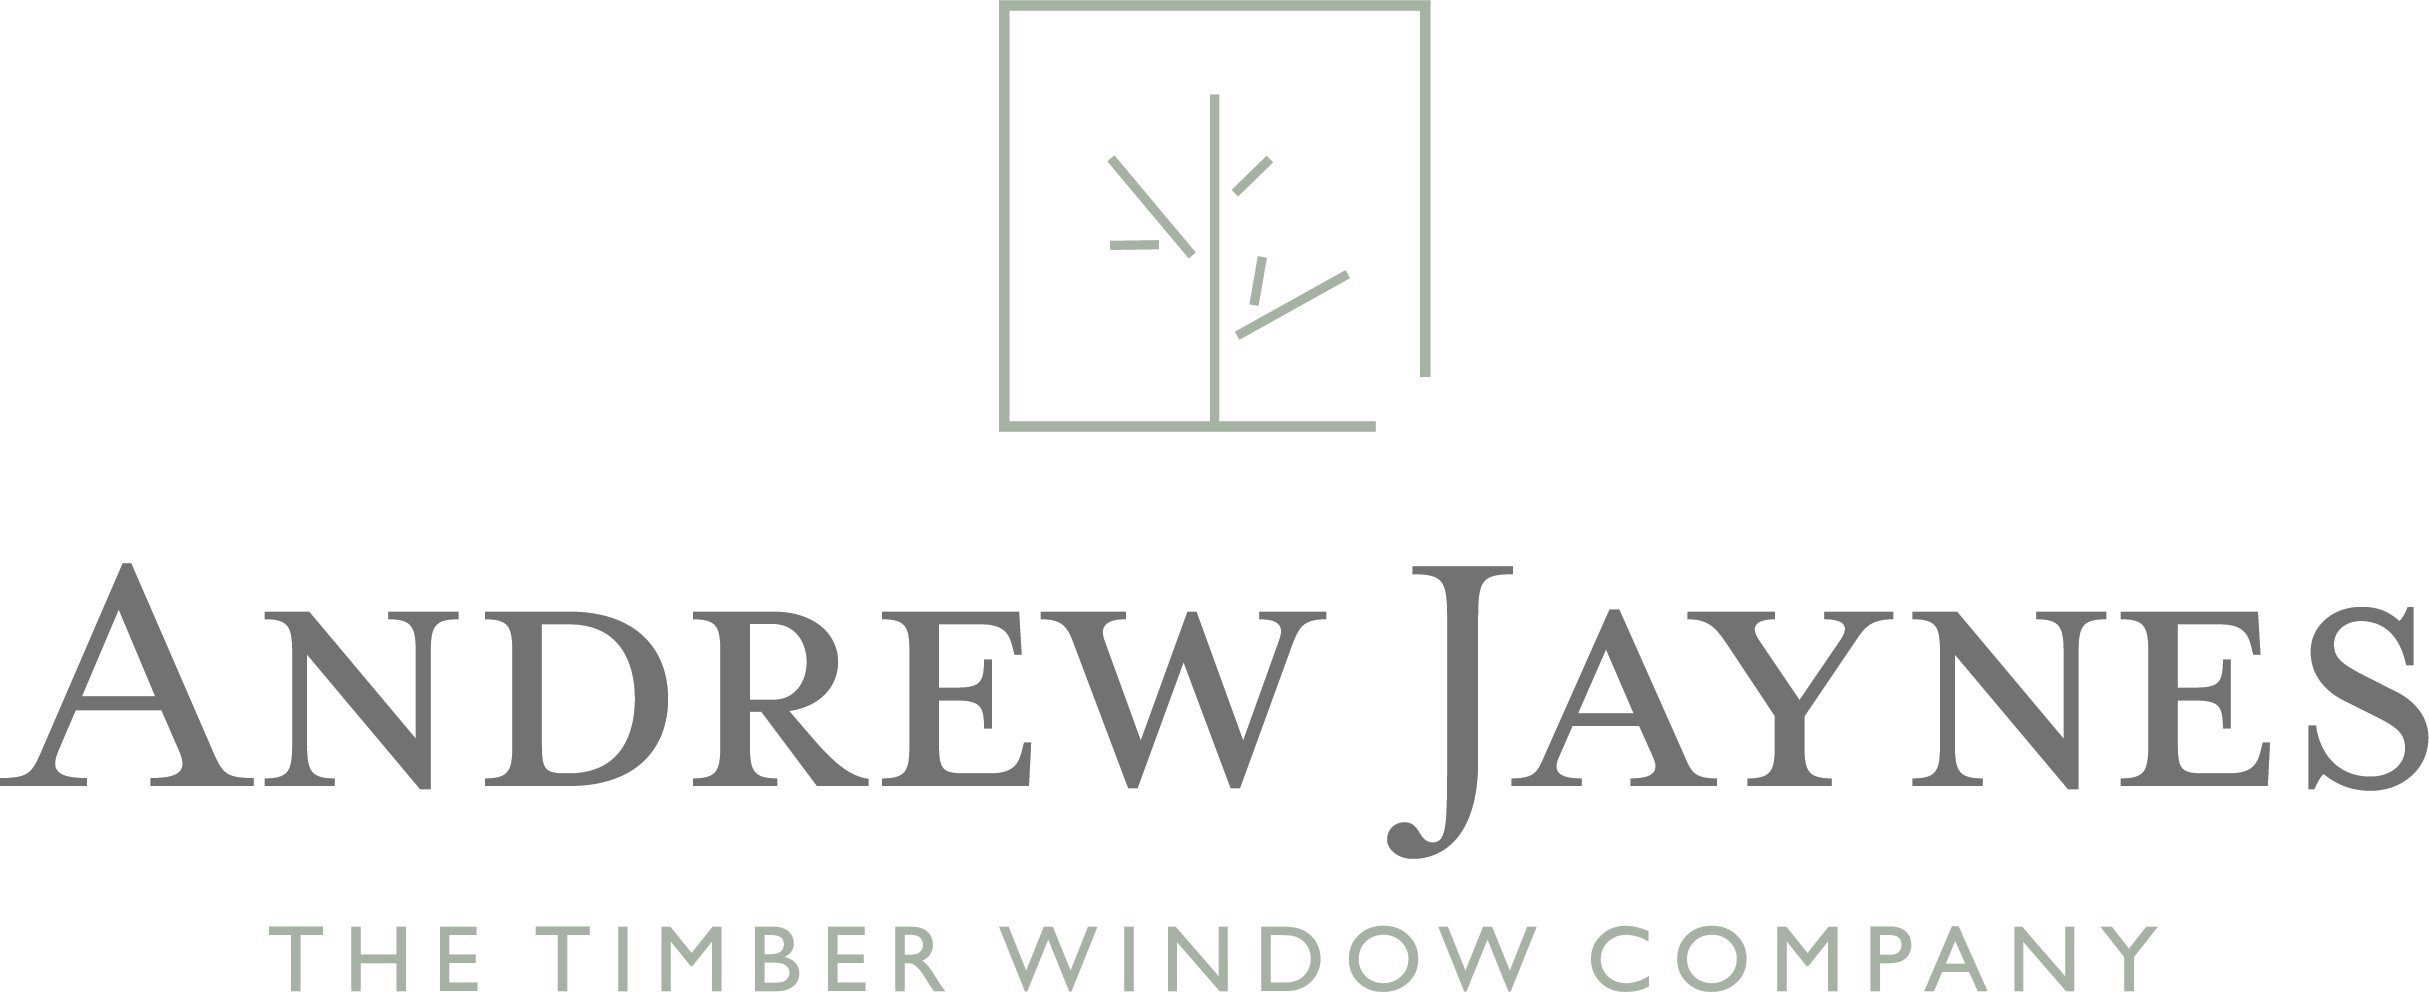 Andrew Jaynes Limited logo